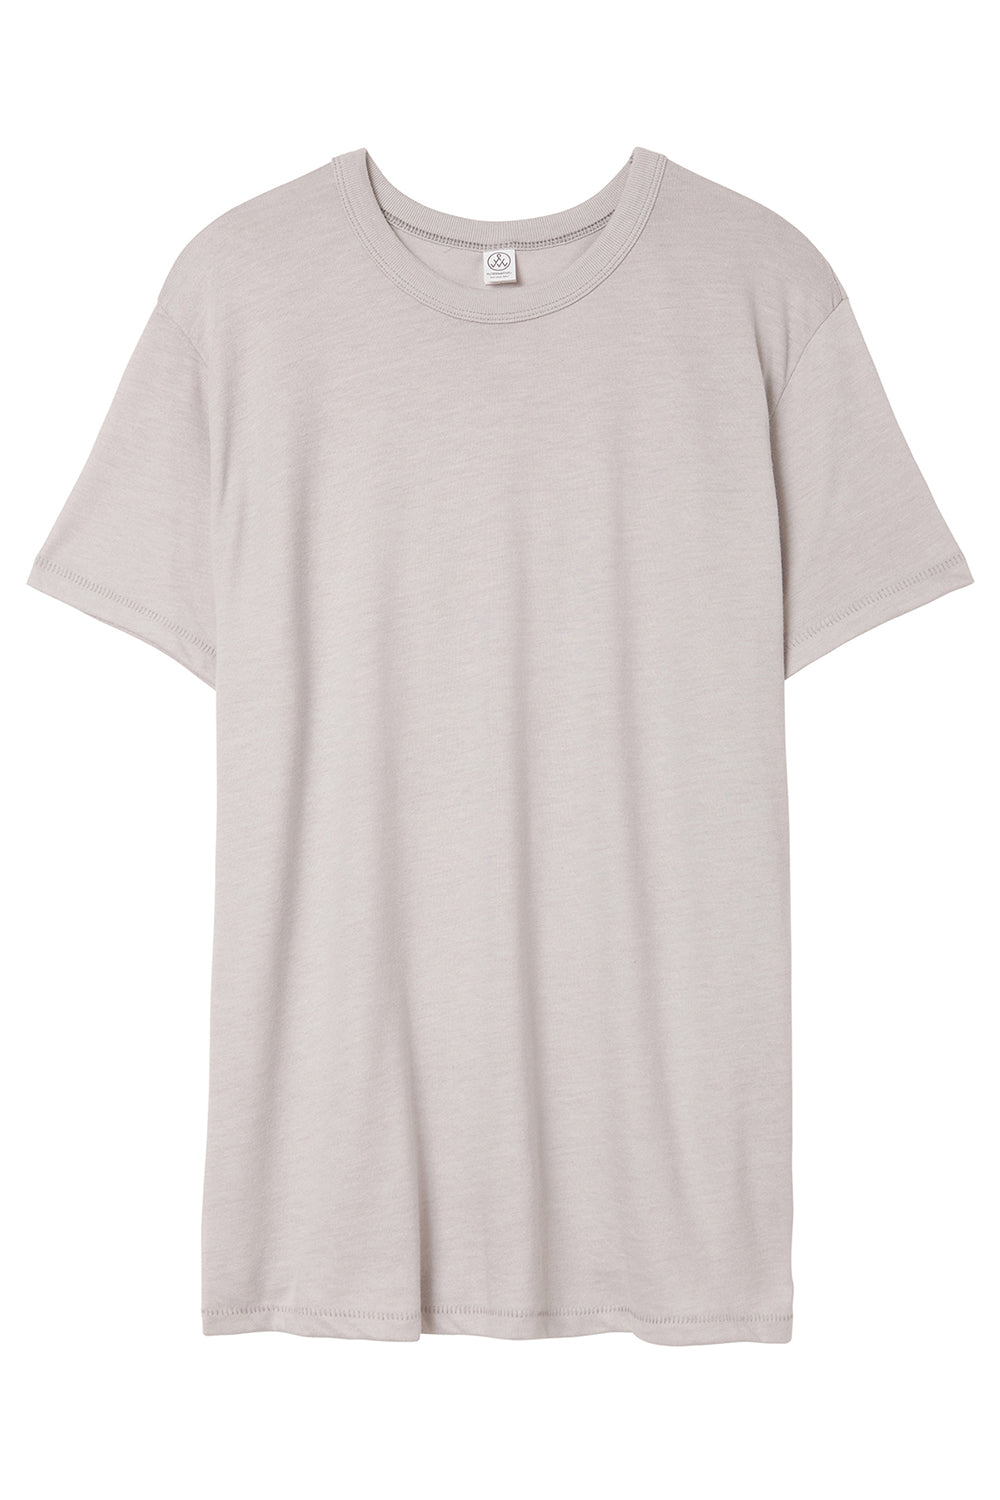 Alternative AA5050/05050BP/5050 Mens The Keeper Vintage Short Sleeve Crewneck T-Shirt Smoke Grey Flat Front